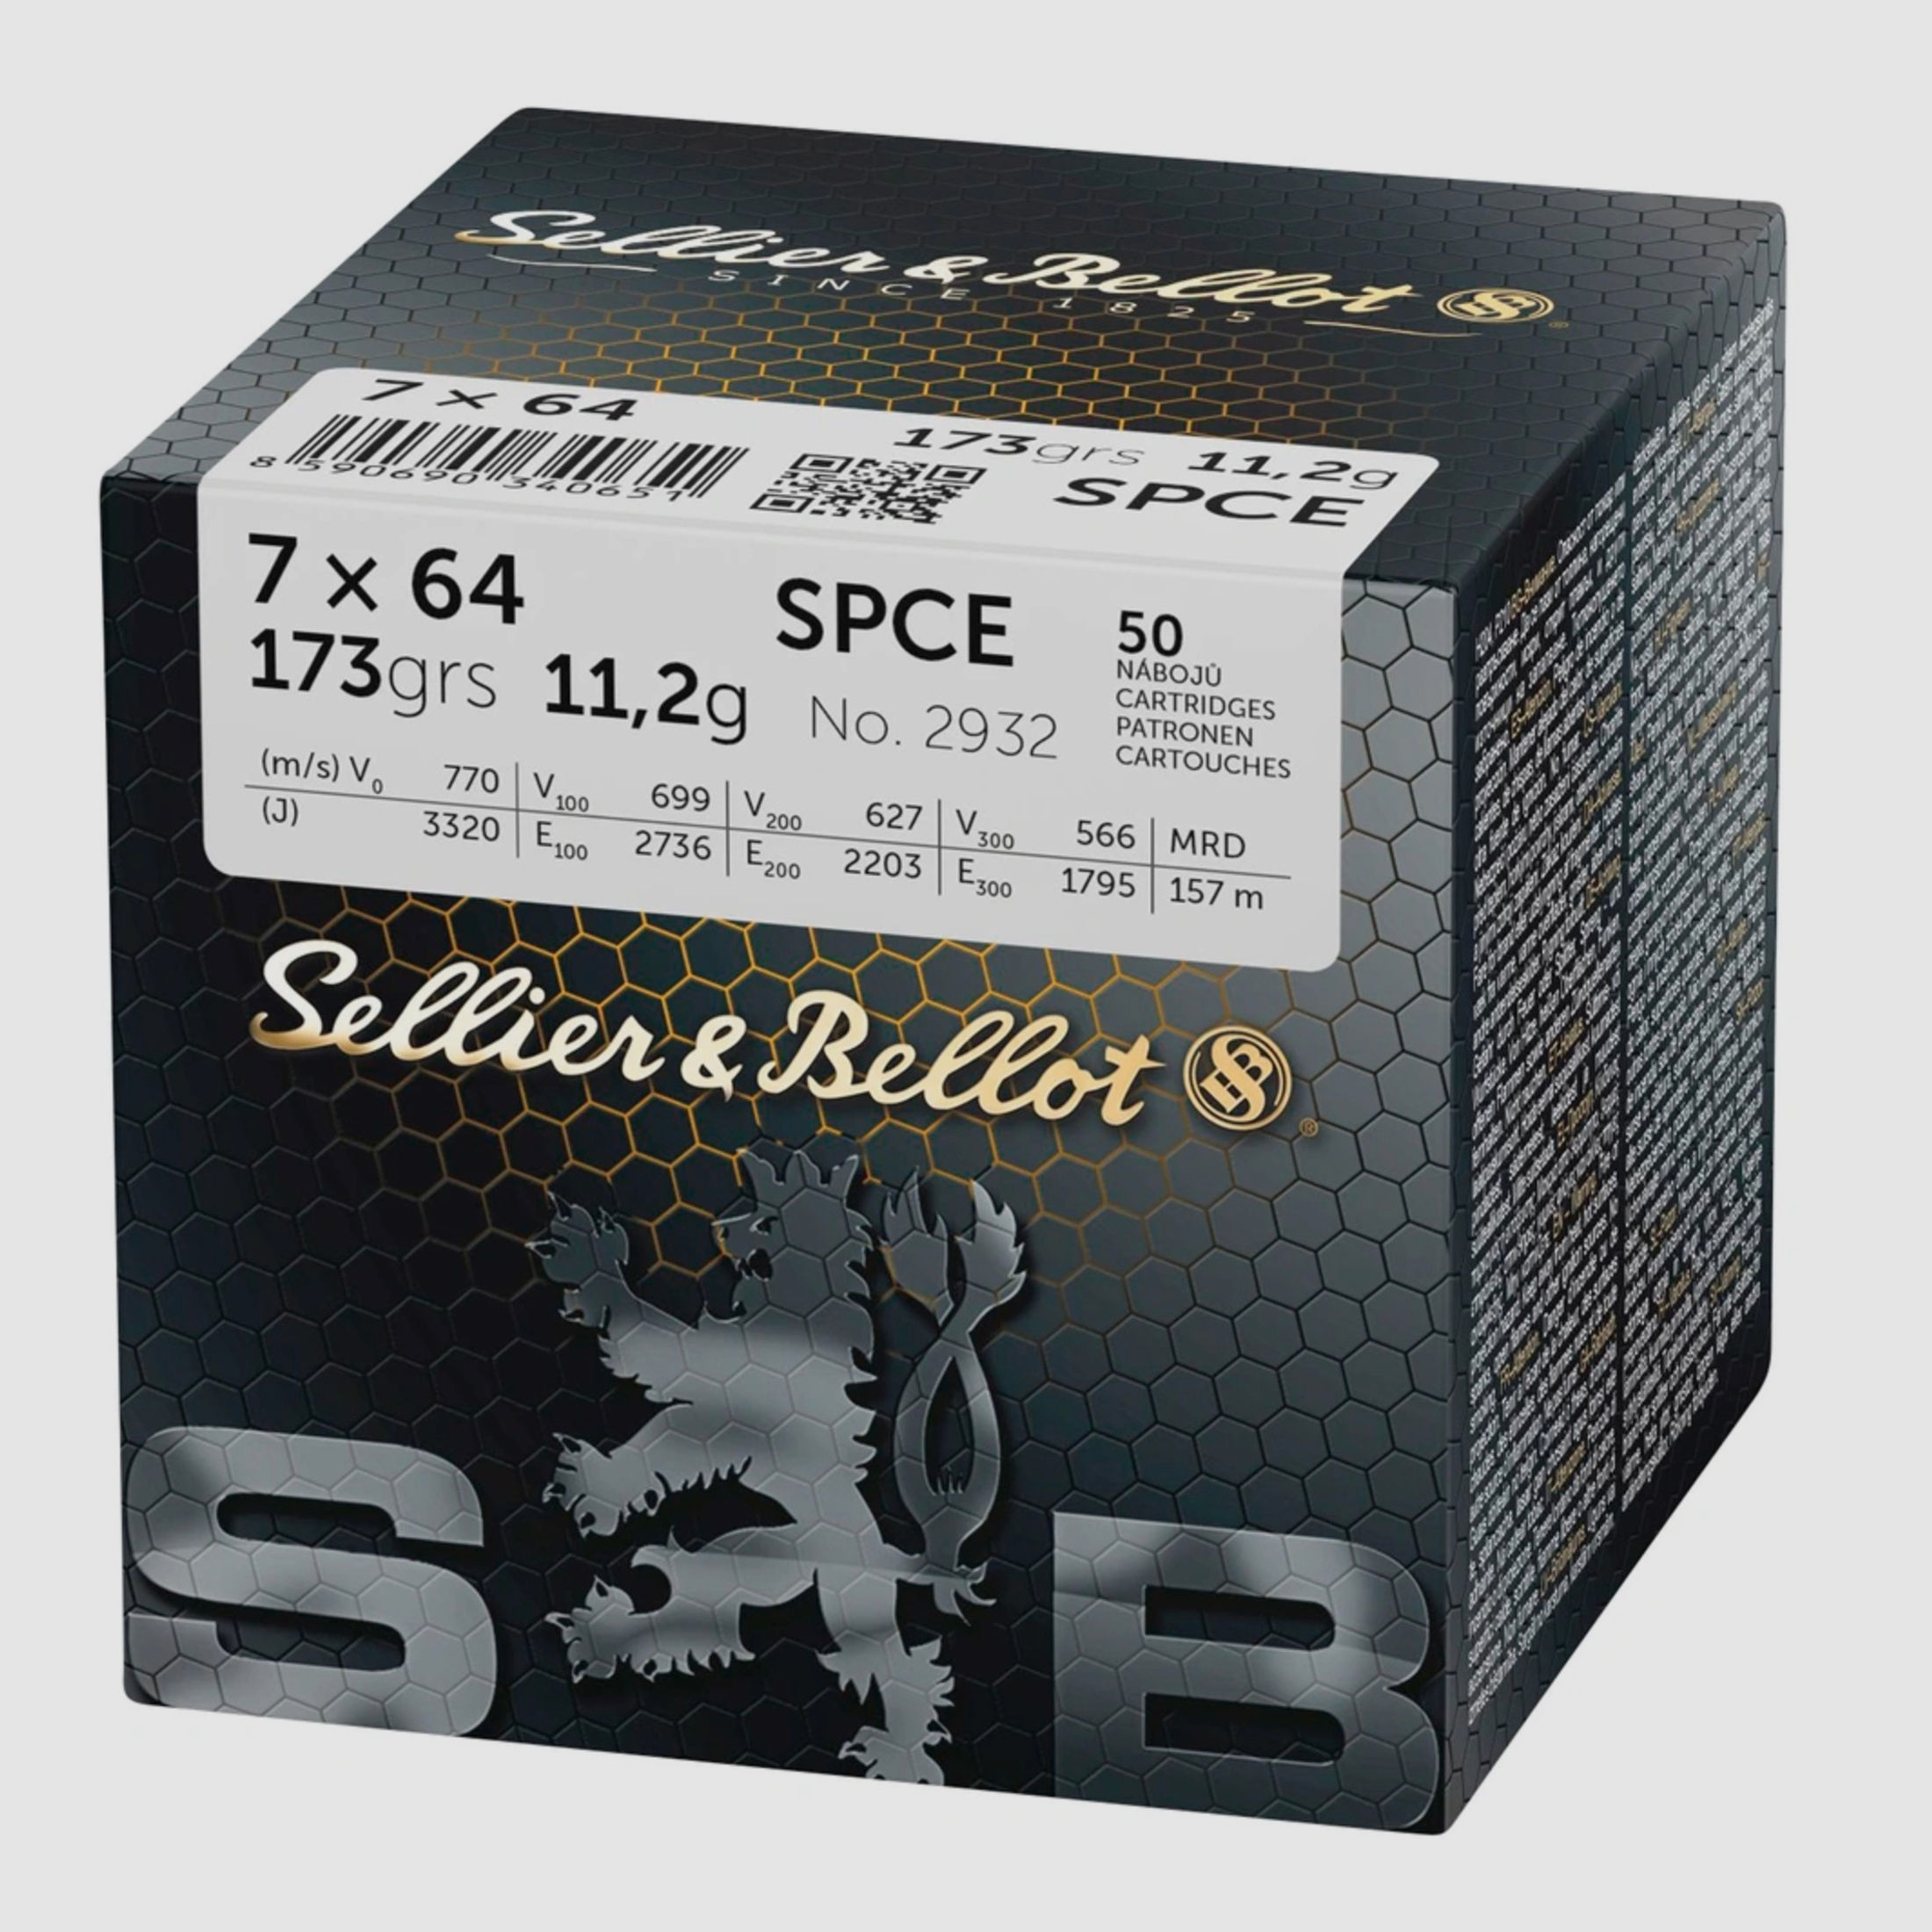 Sellier & Bellot 155484 7x64 Teilmantel SPCE 11,2g 173grs.